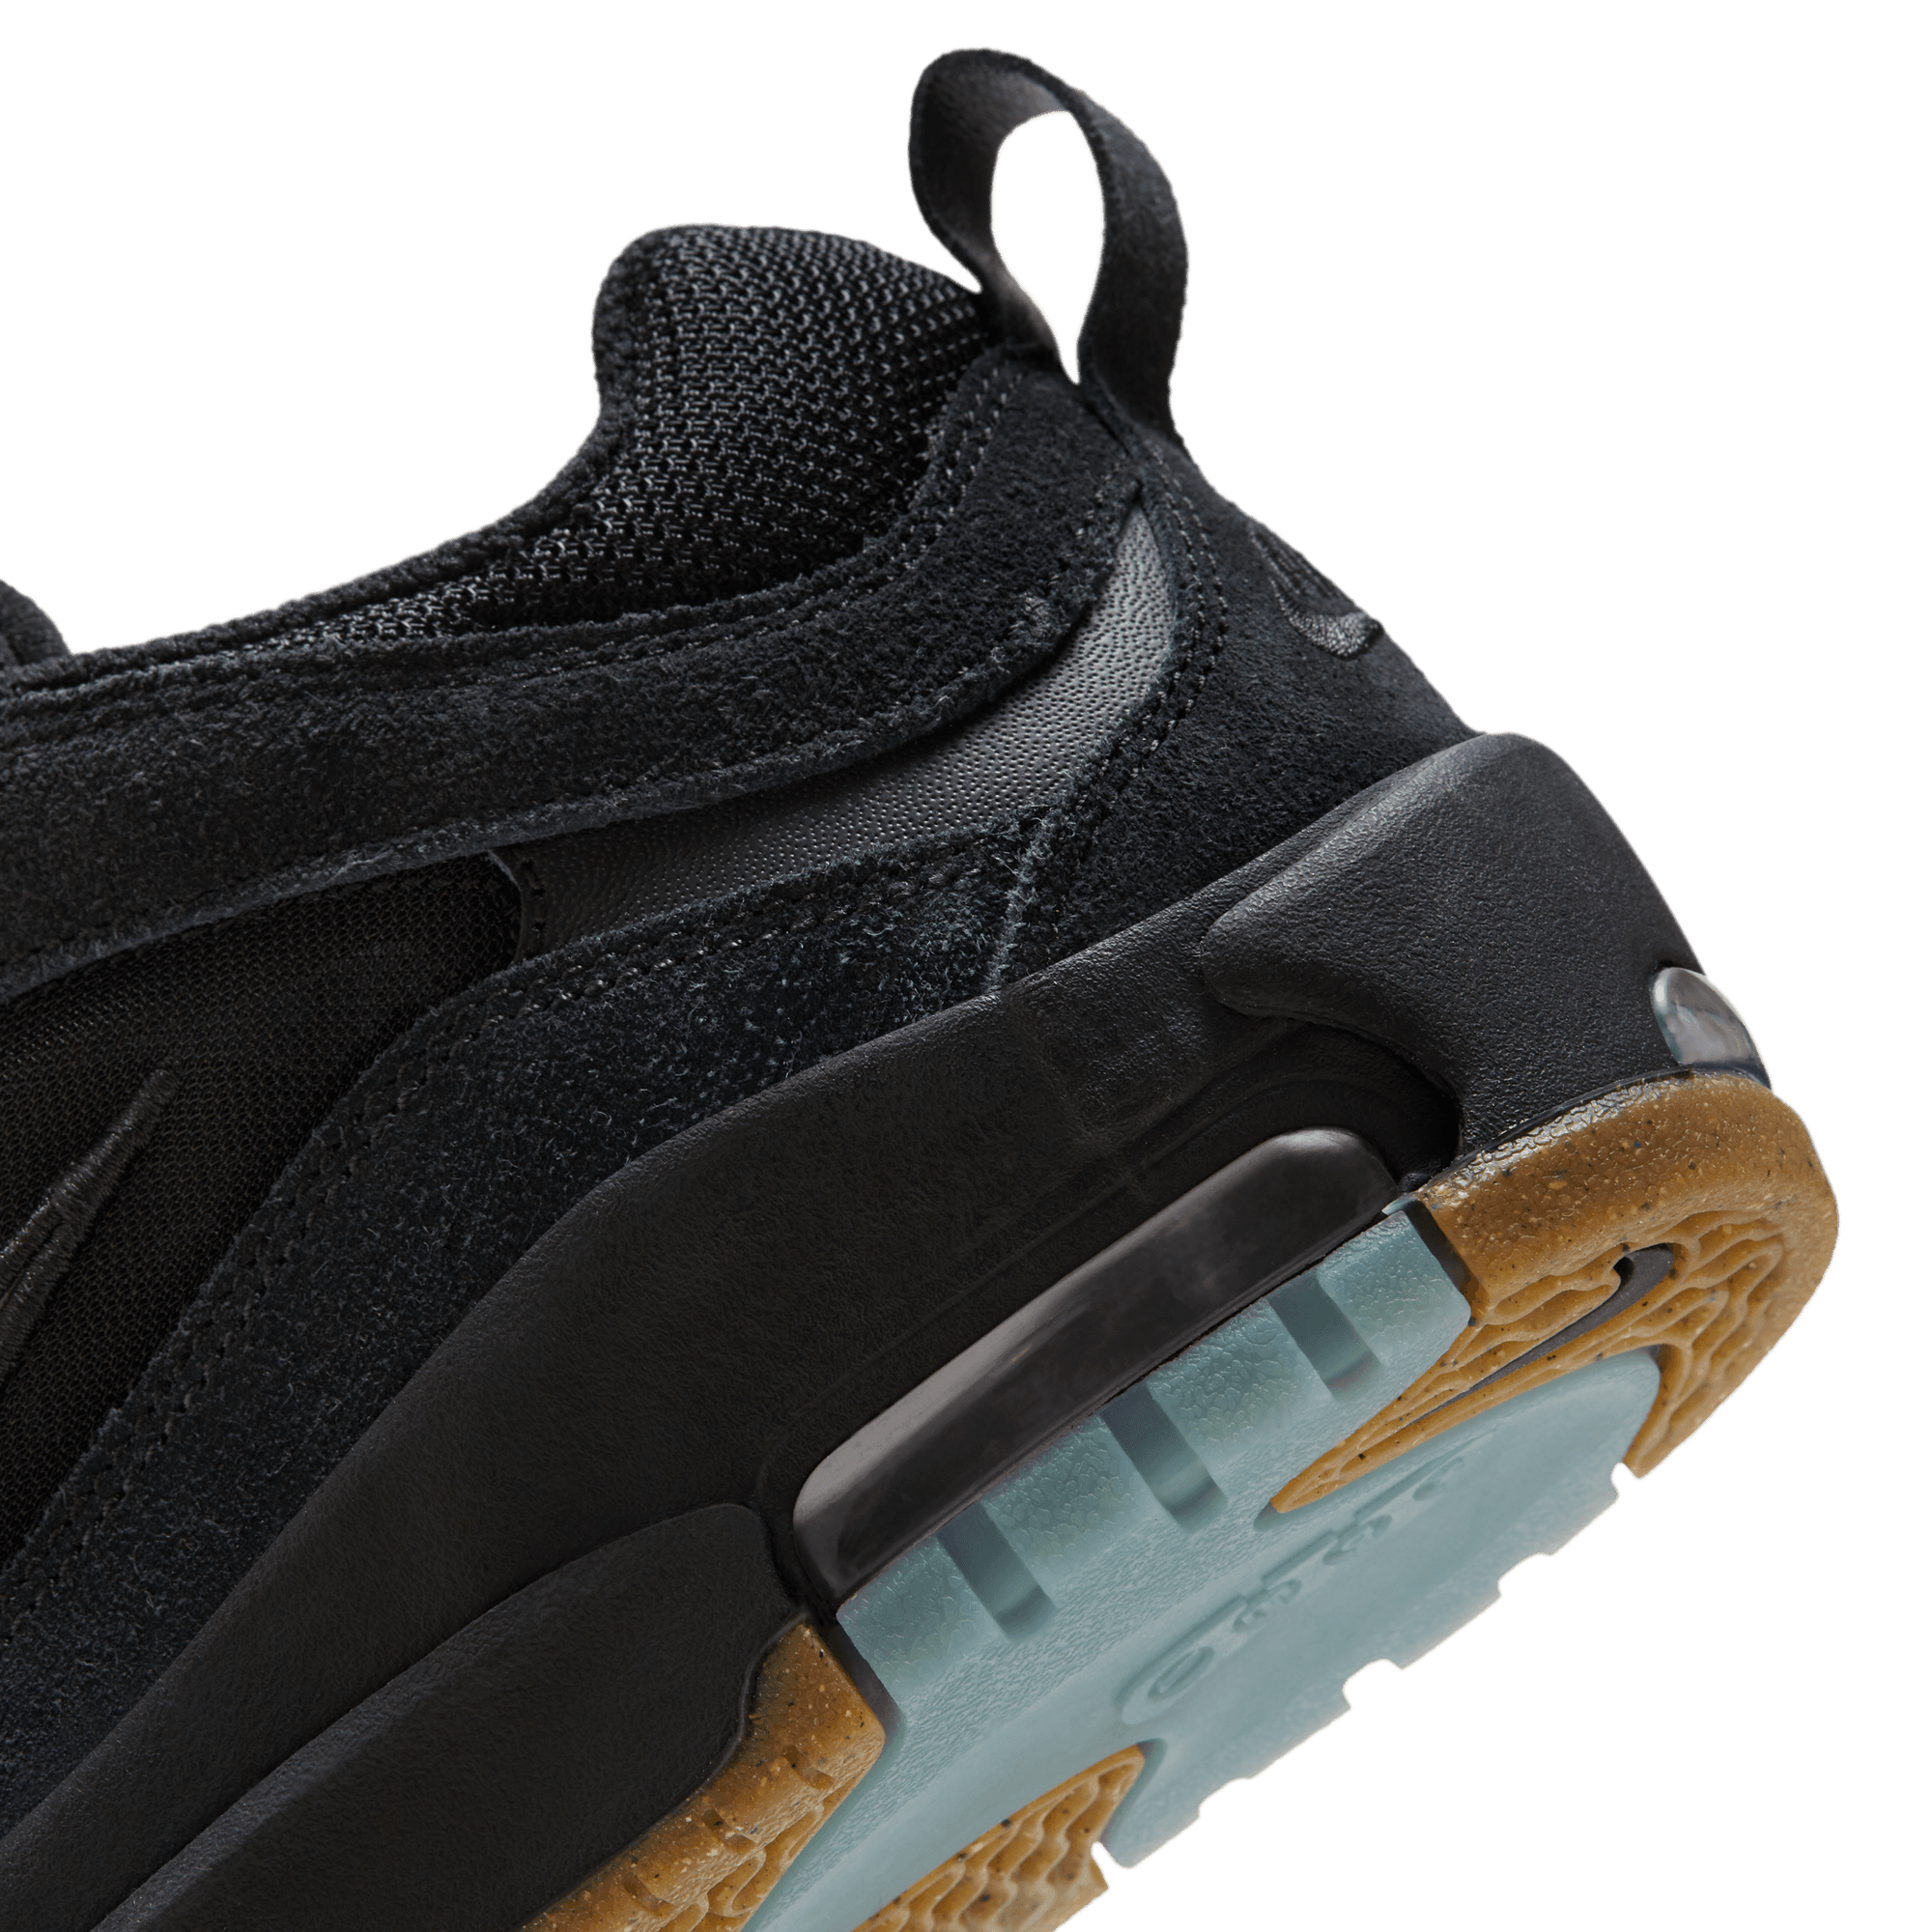 Black/Black Ishod Wair Max 2 Nike SB Shoe Detail